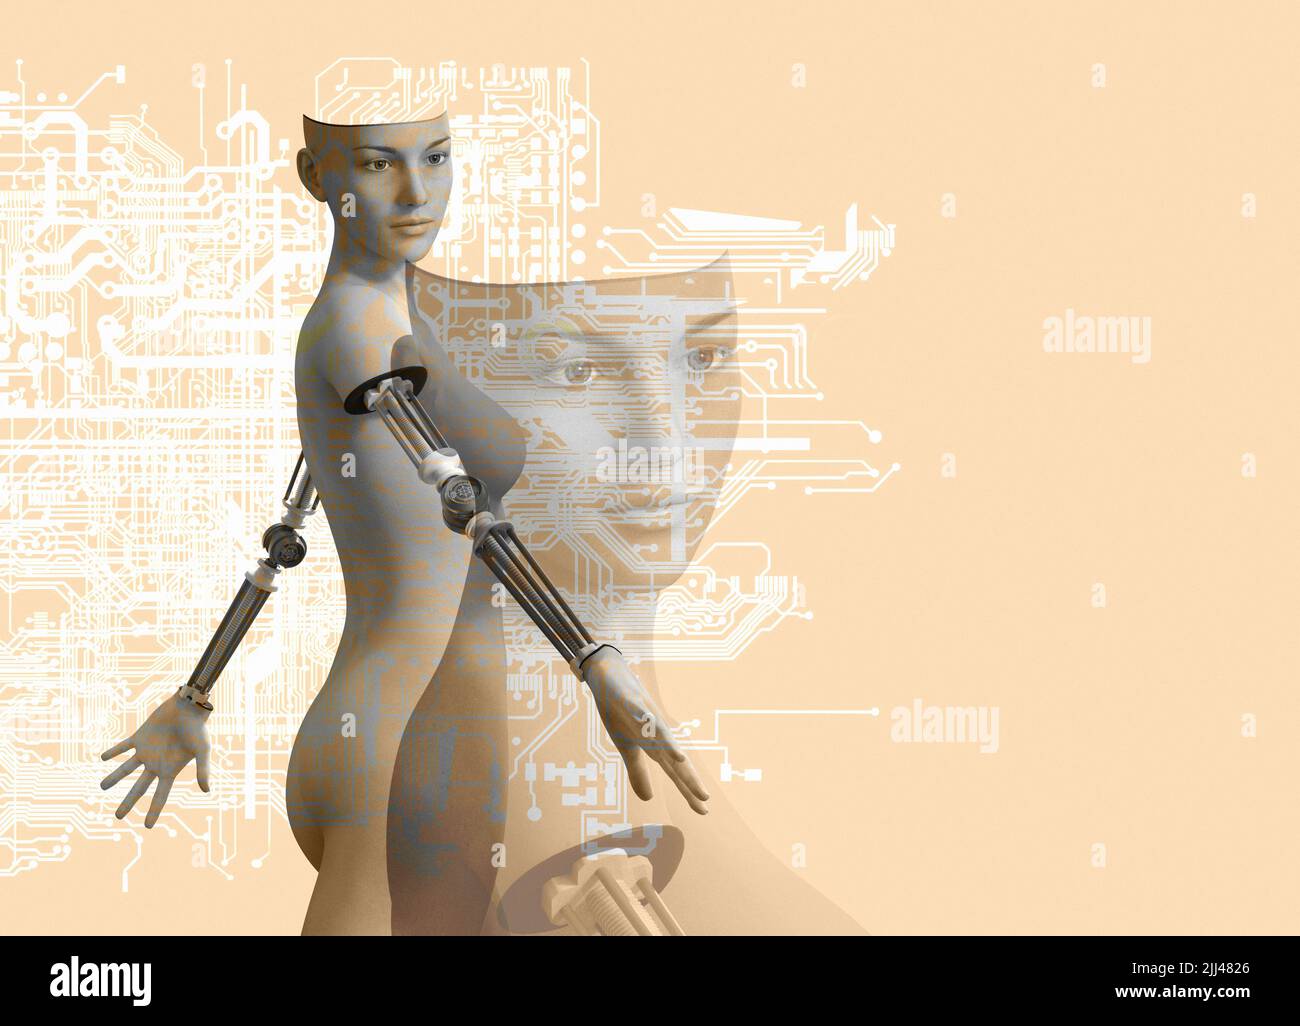 Artificial intelligence, illustration. Stock Photo